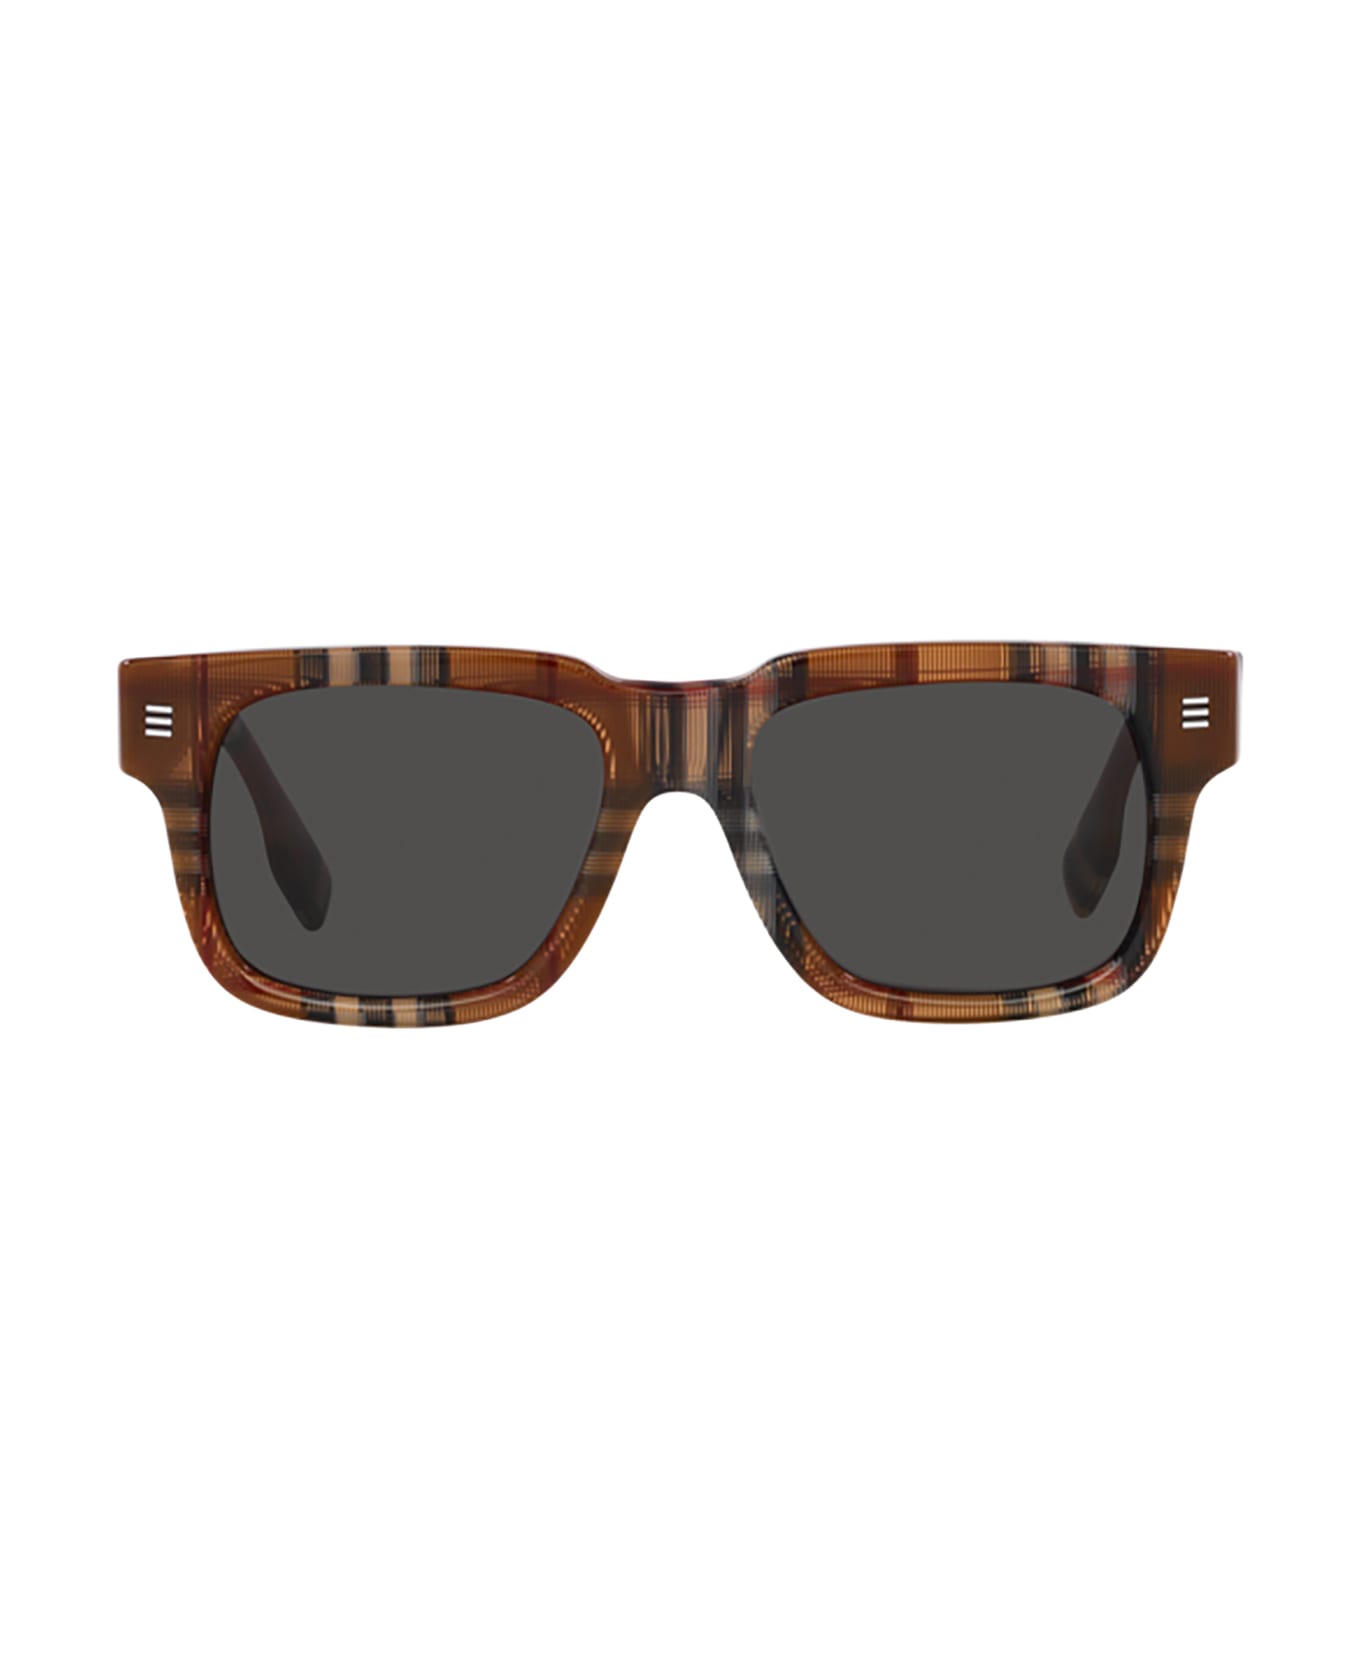 Burberry Eyewear Be4394 Check Brown Sunglasses - Check Brown